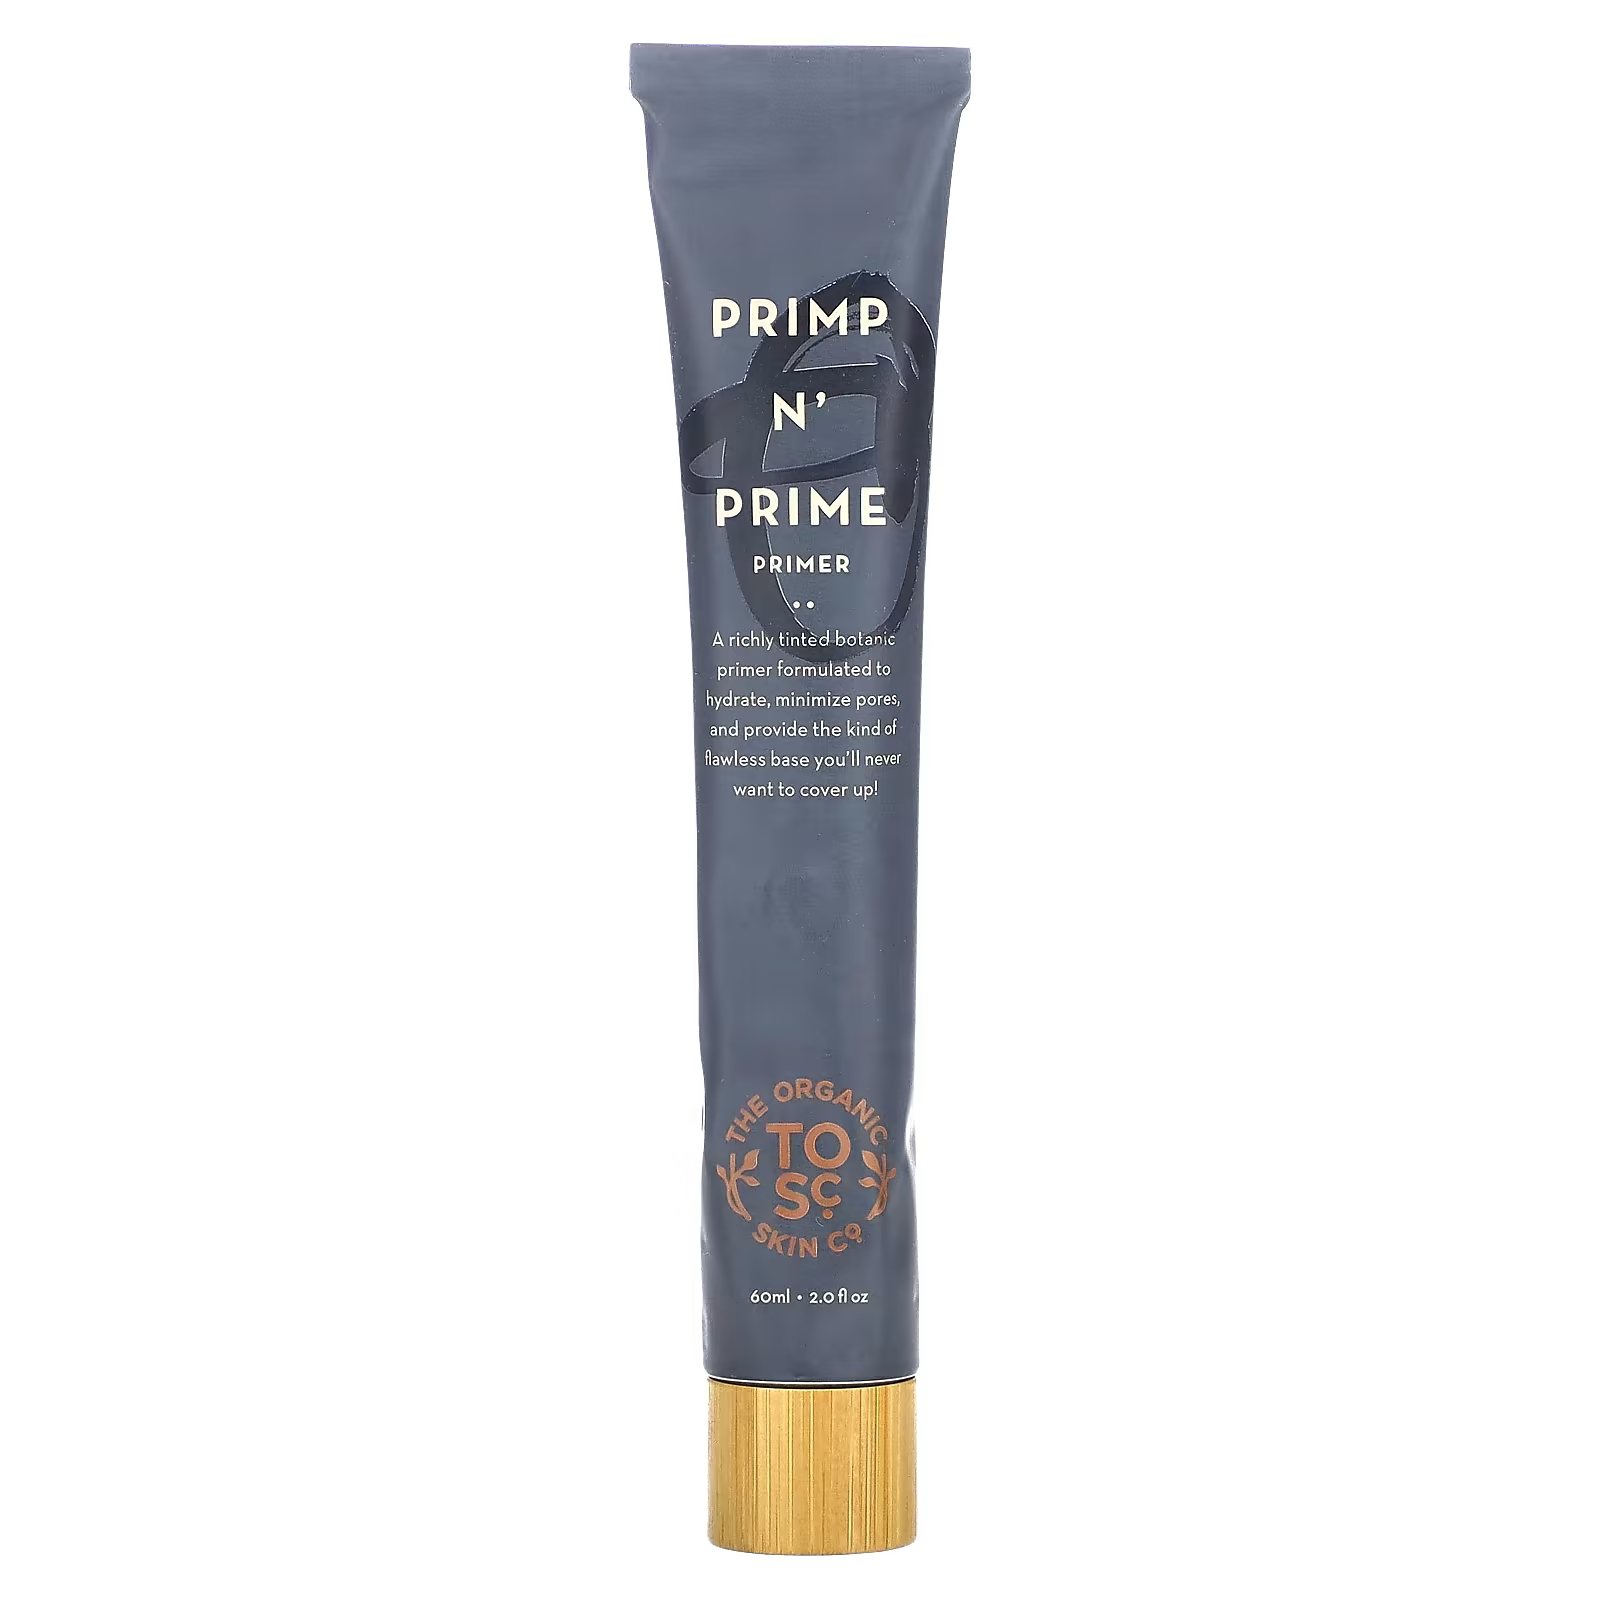 The Organic Skin Co. Primp N Prime Primer Rose Gold, 2 жидких унции (60 мл)